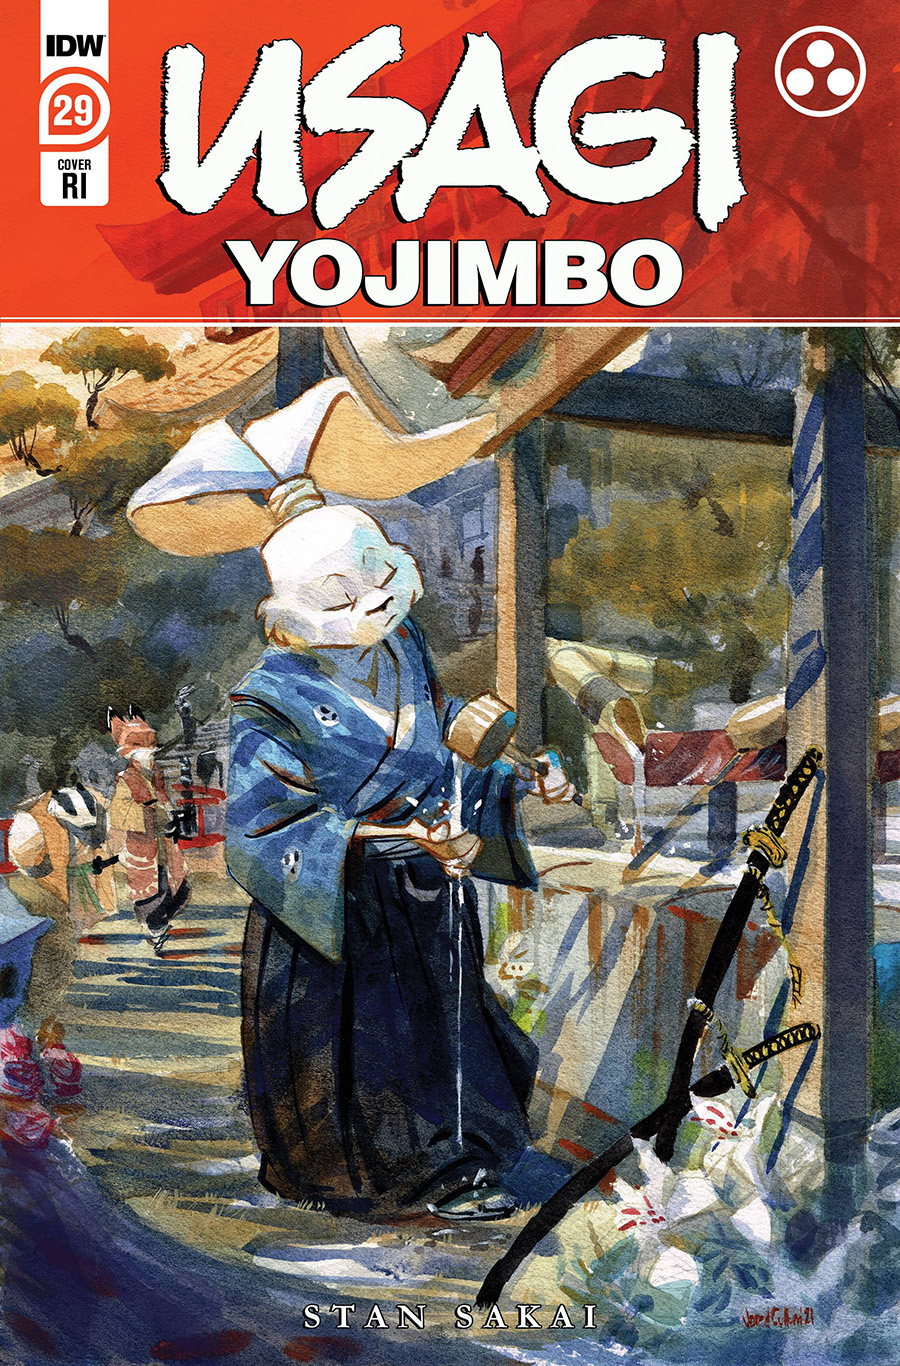 Usagi Yojimbo Vol 4 #29 Cover B Incentive Jared Cullum Variant Cover